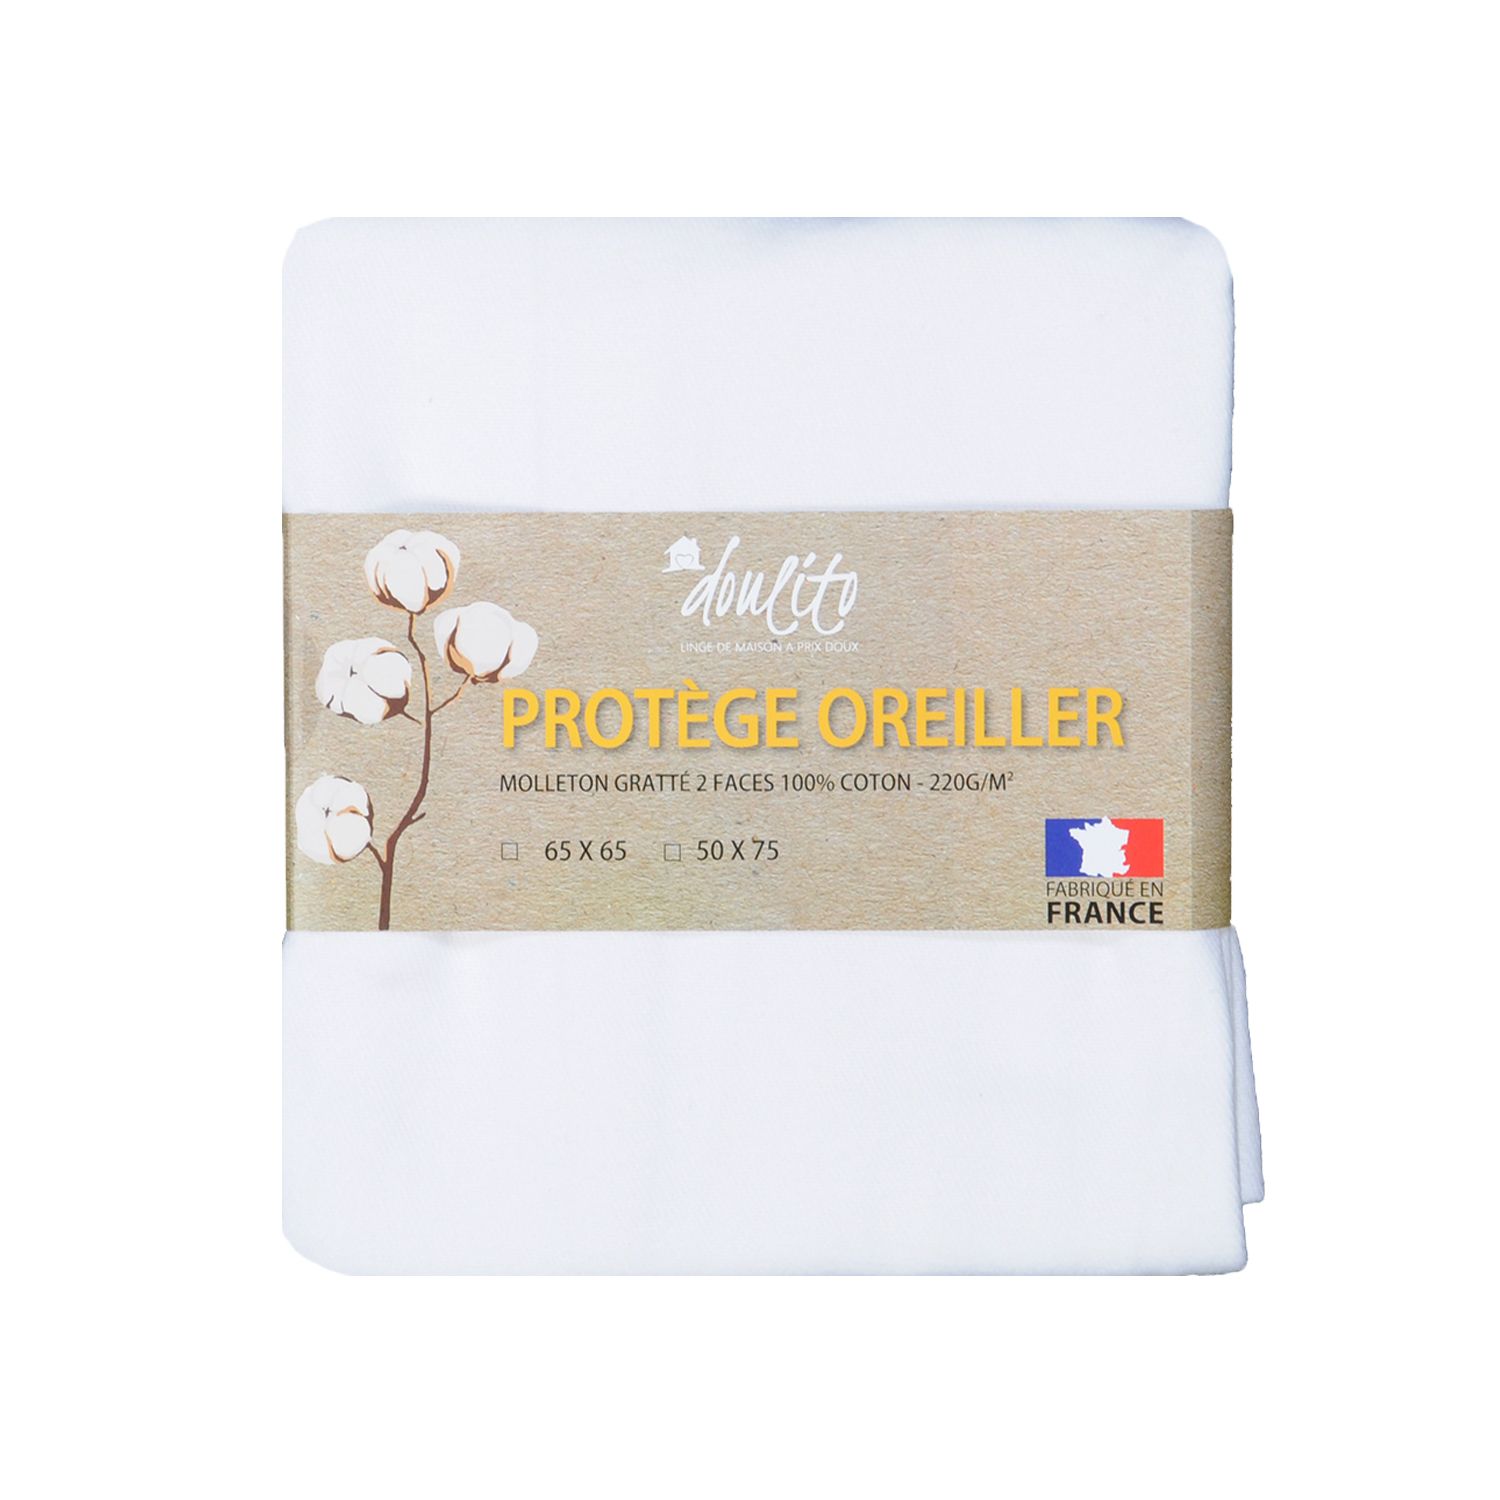 Protège oreiller Doulito - 50x75 cm - Made in France - Coton